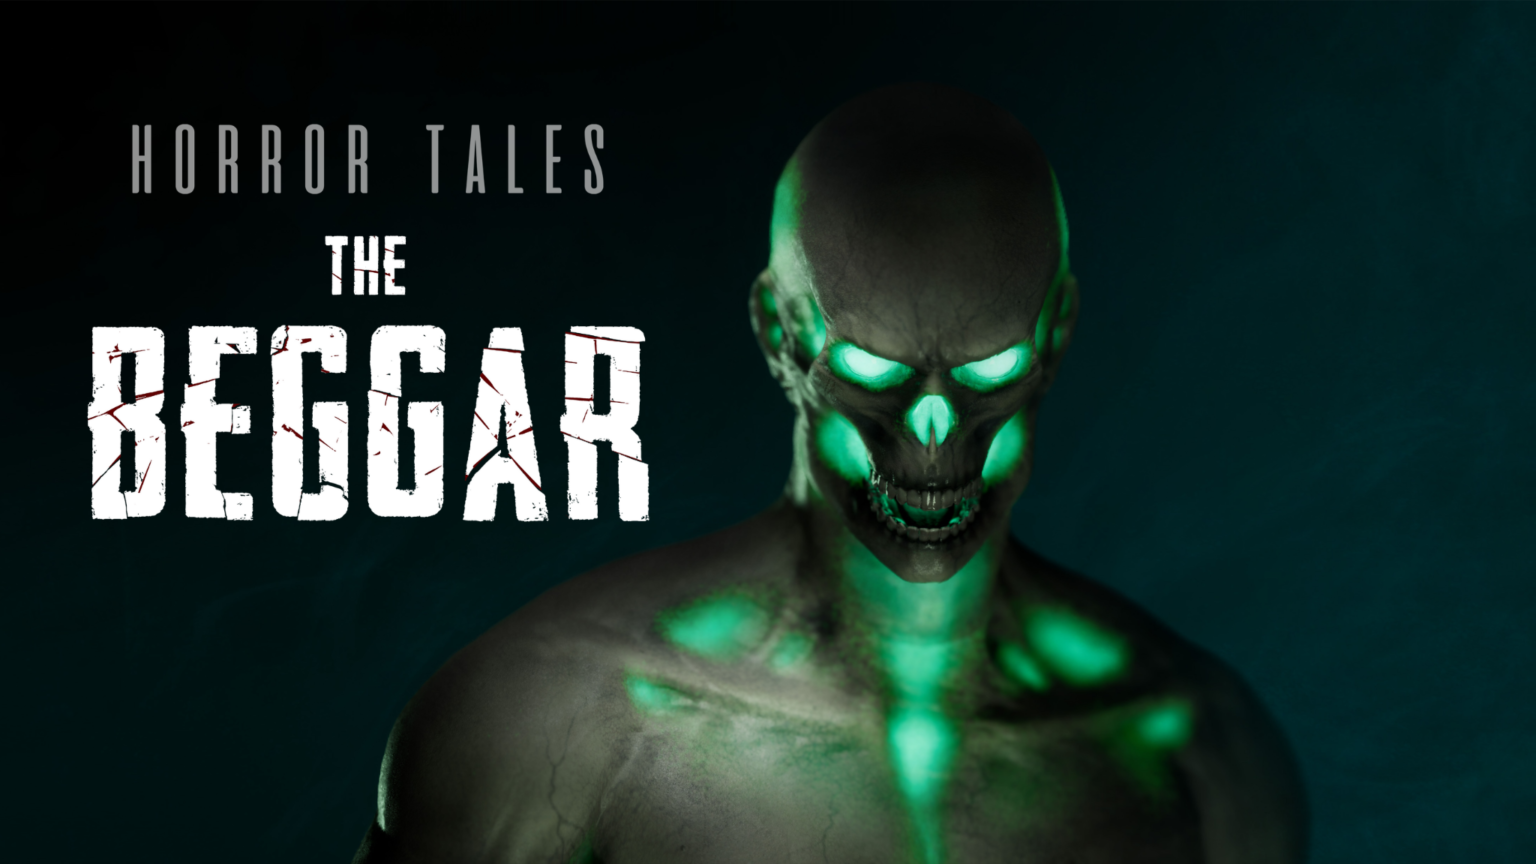 Horror Tales; The Beggar